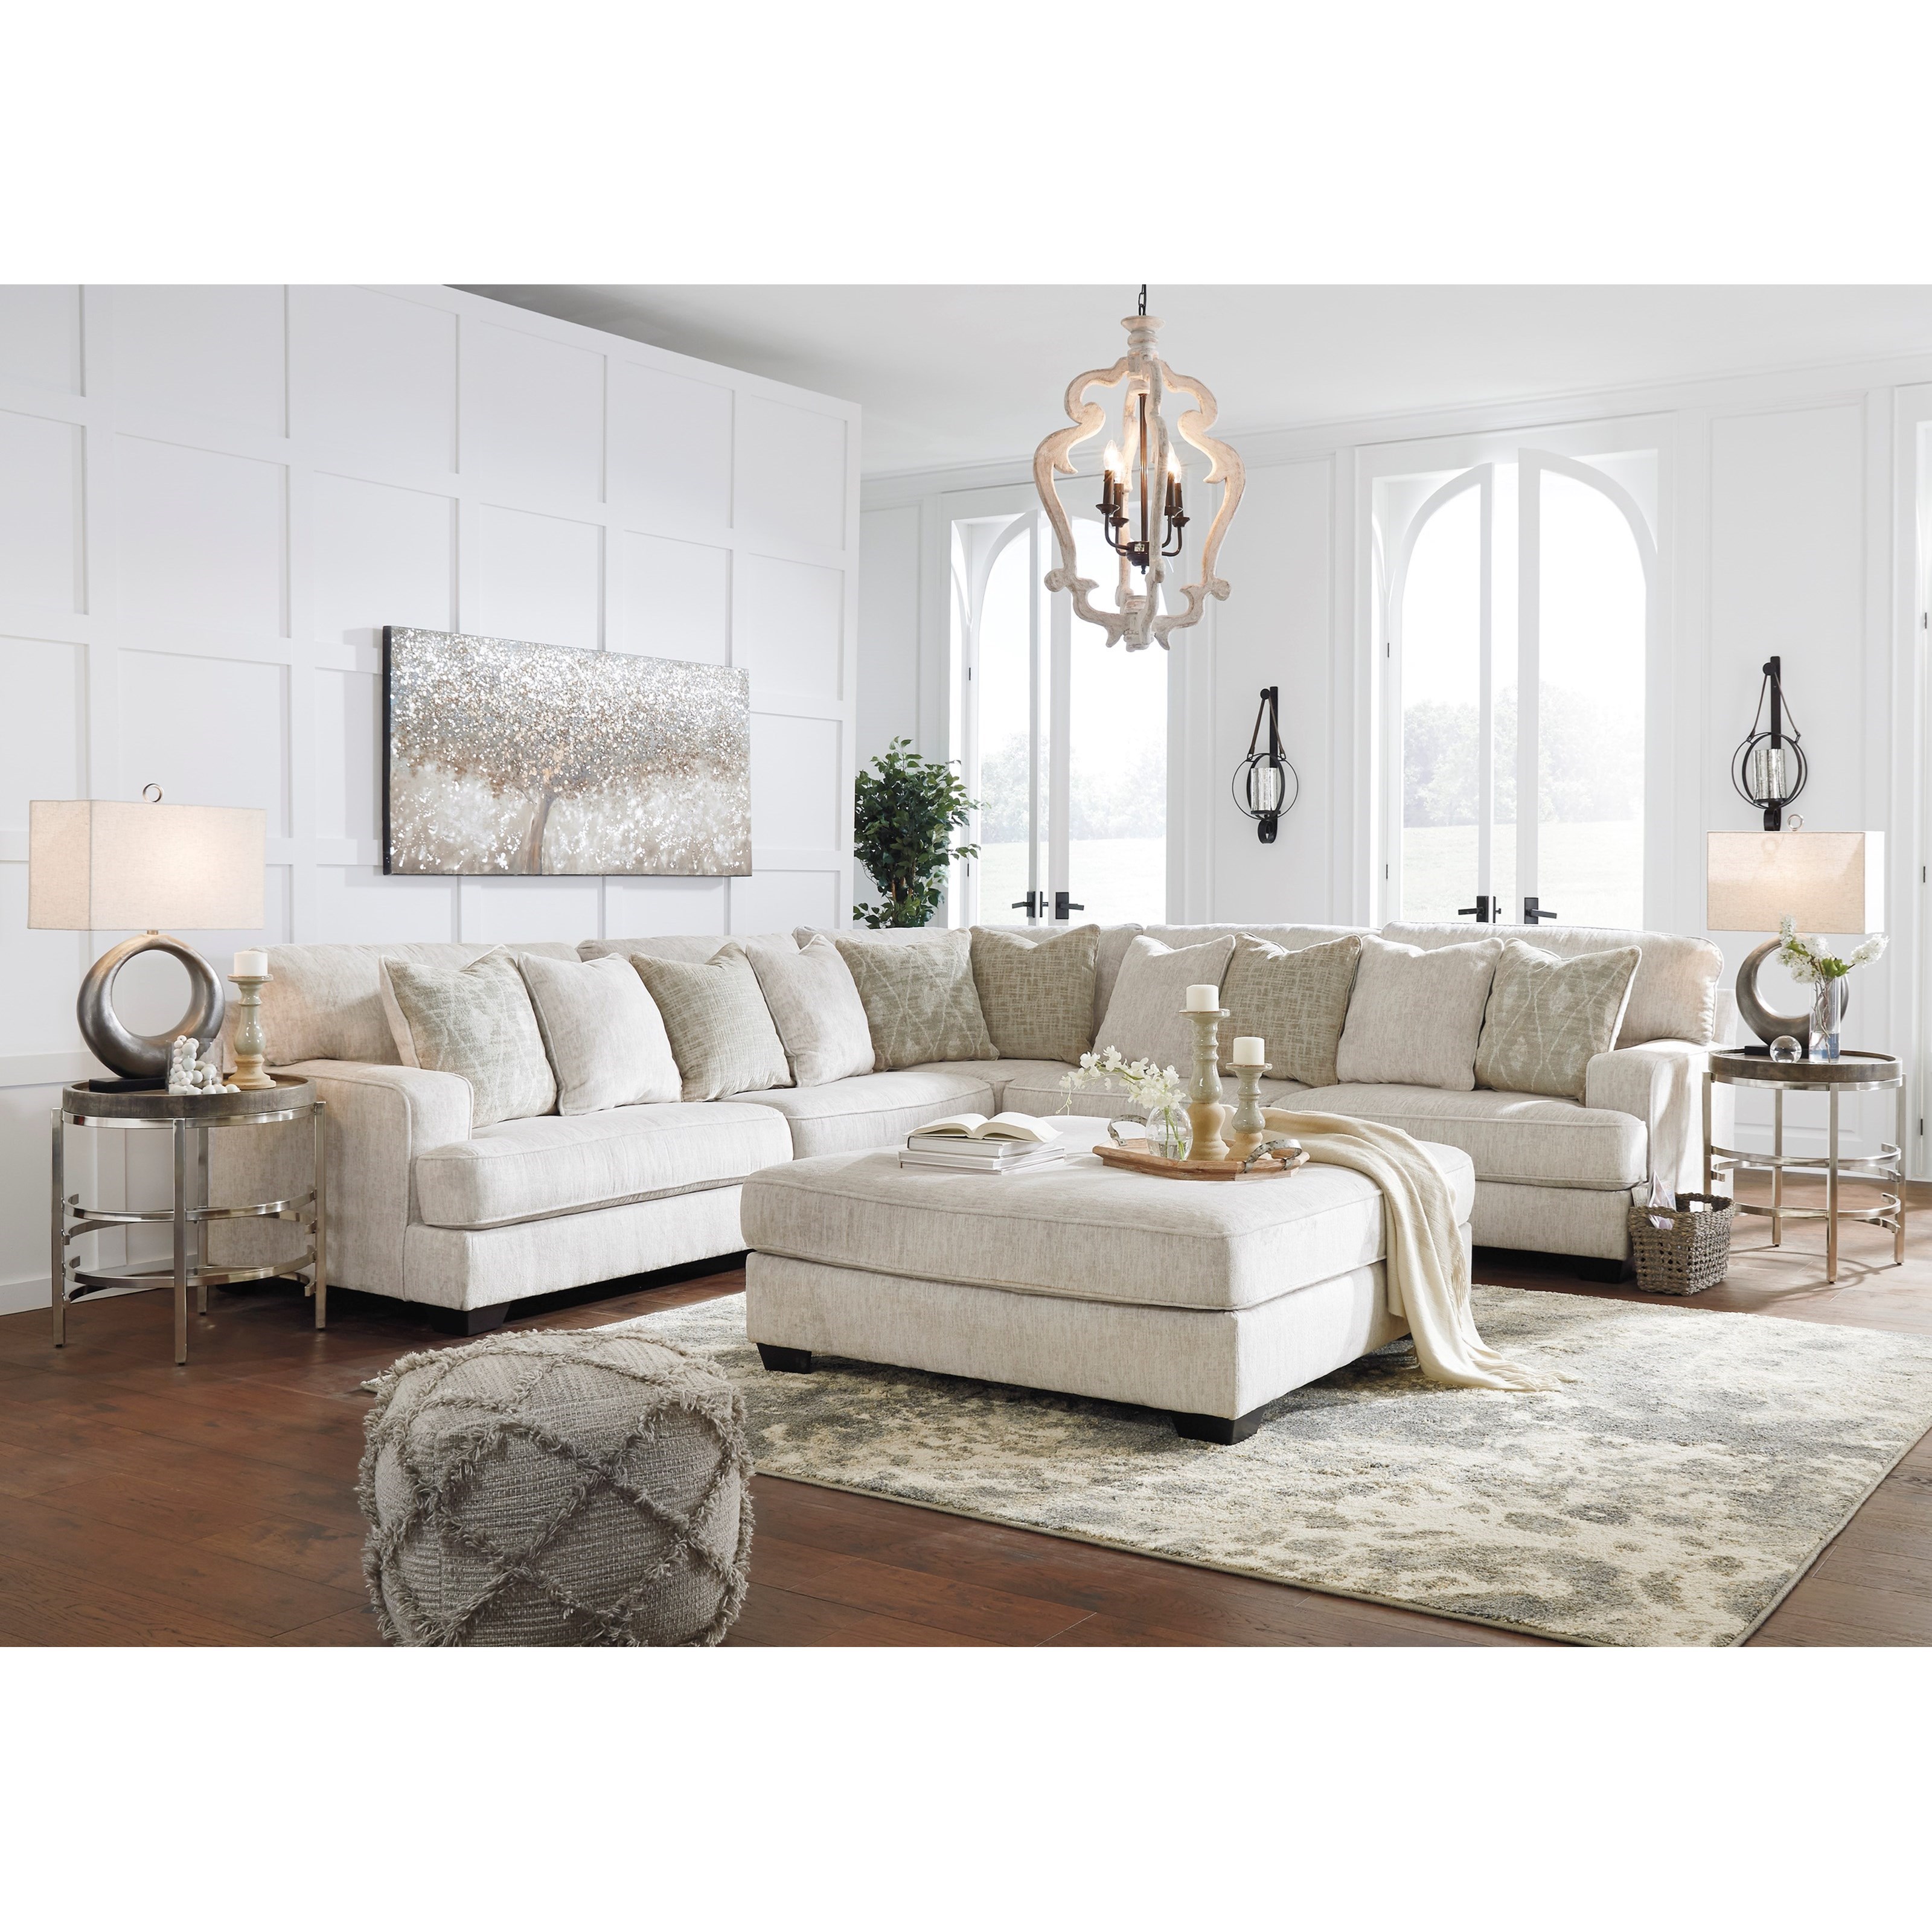 furniture for living room